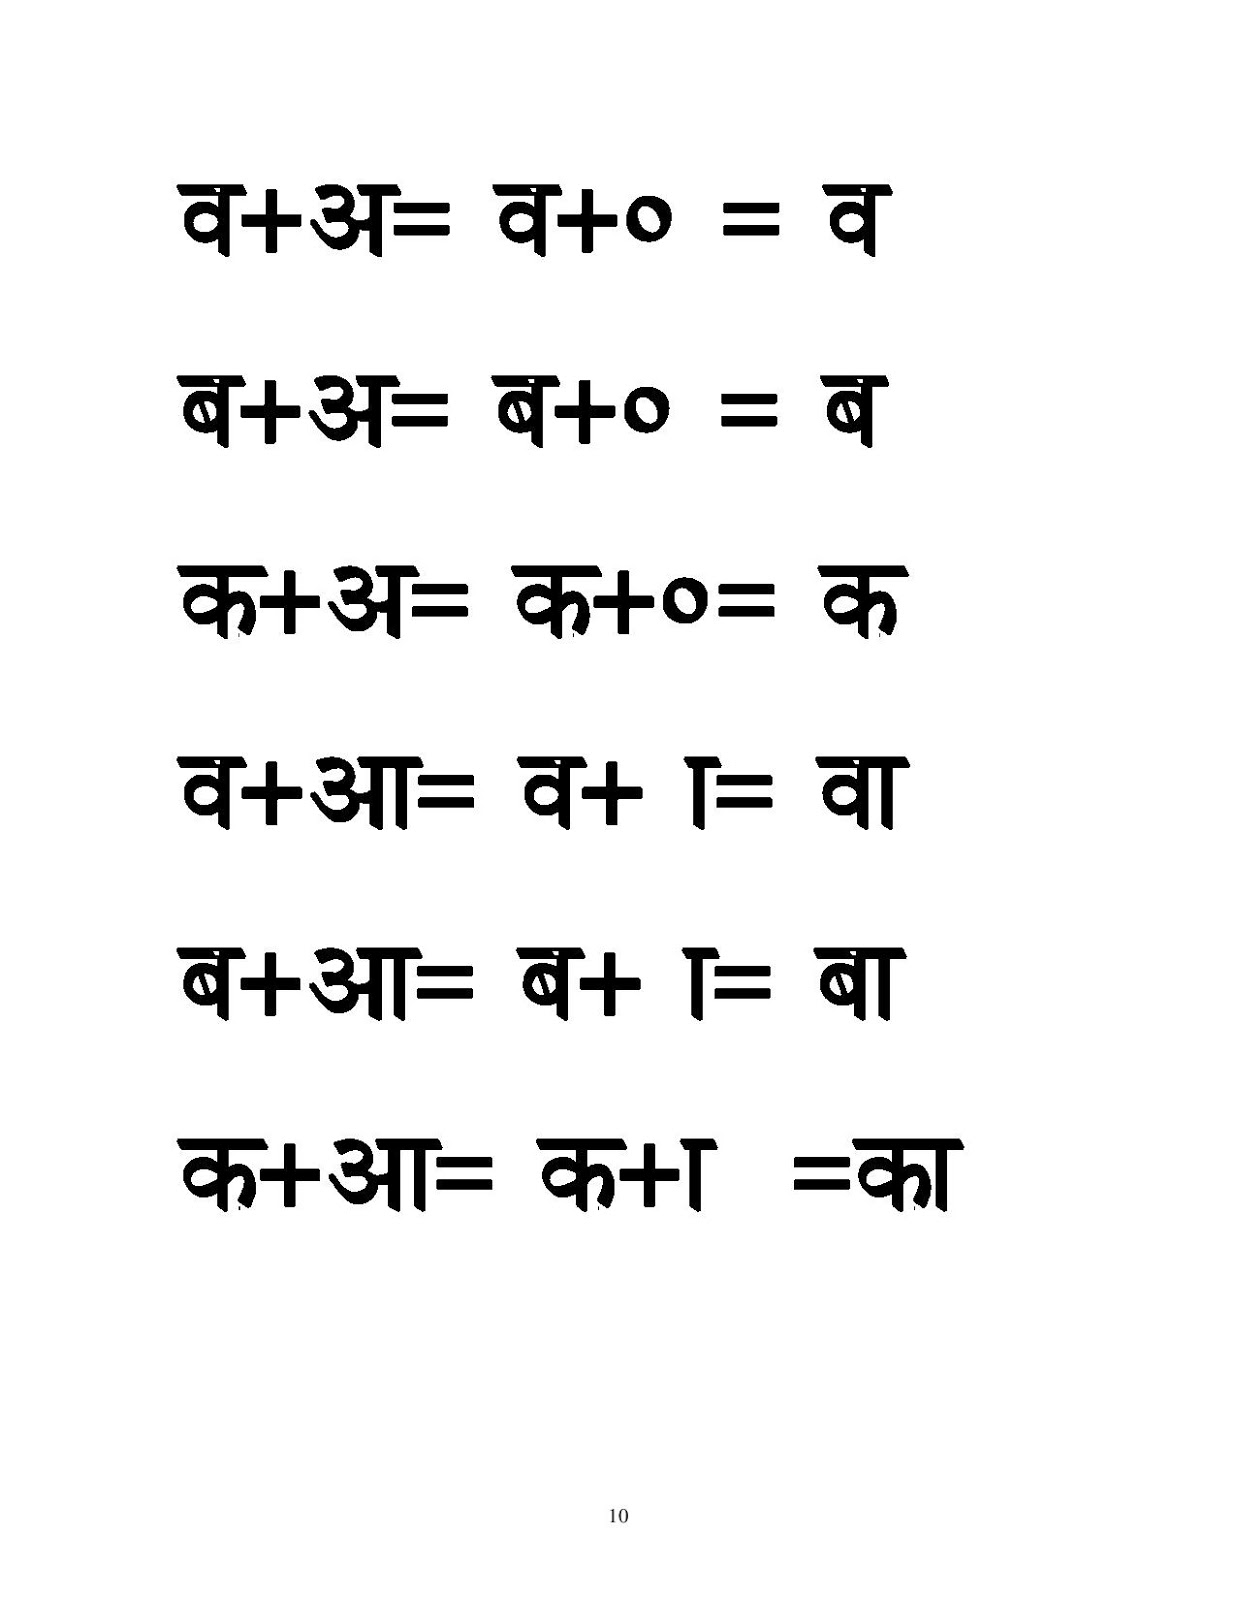 hindi grammar work sheet collection for classes 56 7 8 barahakhari